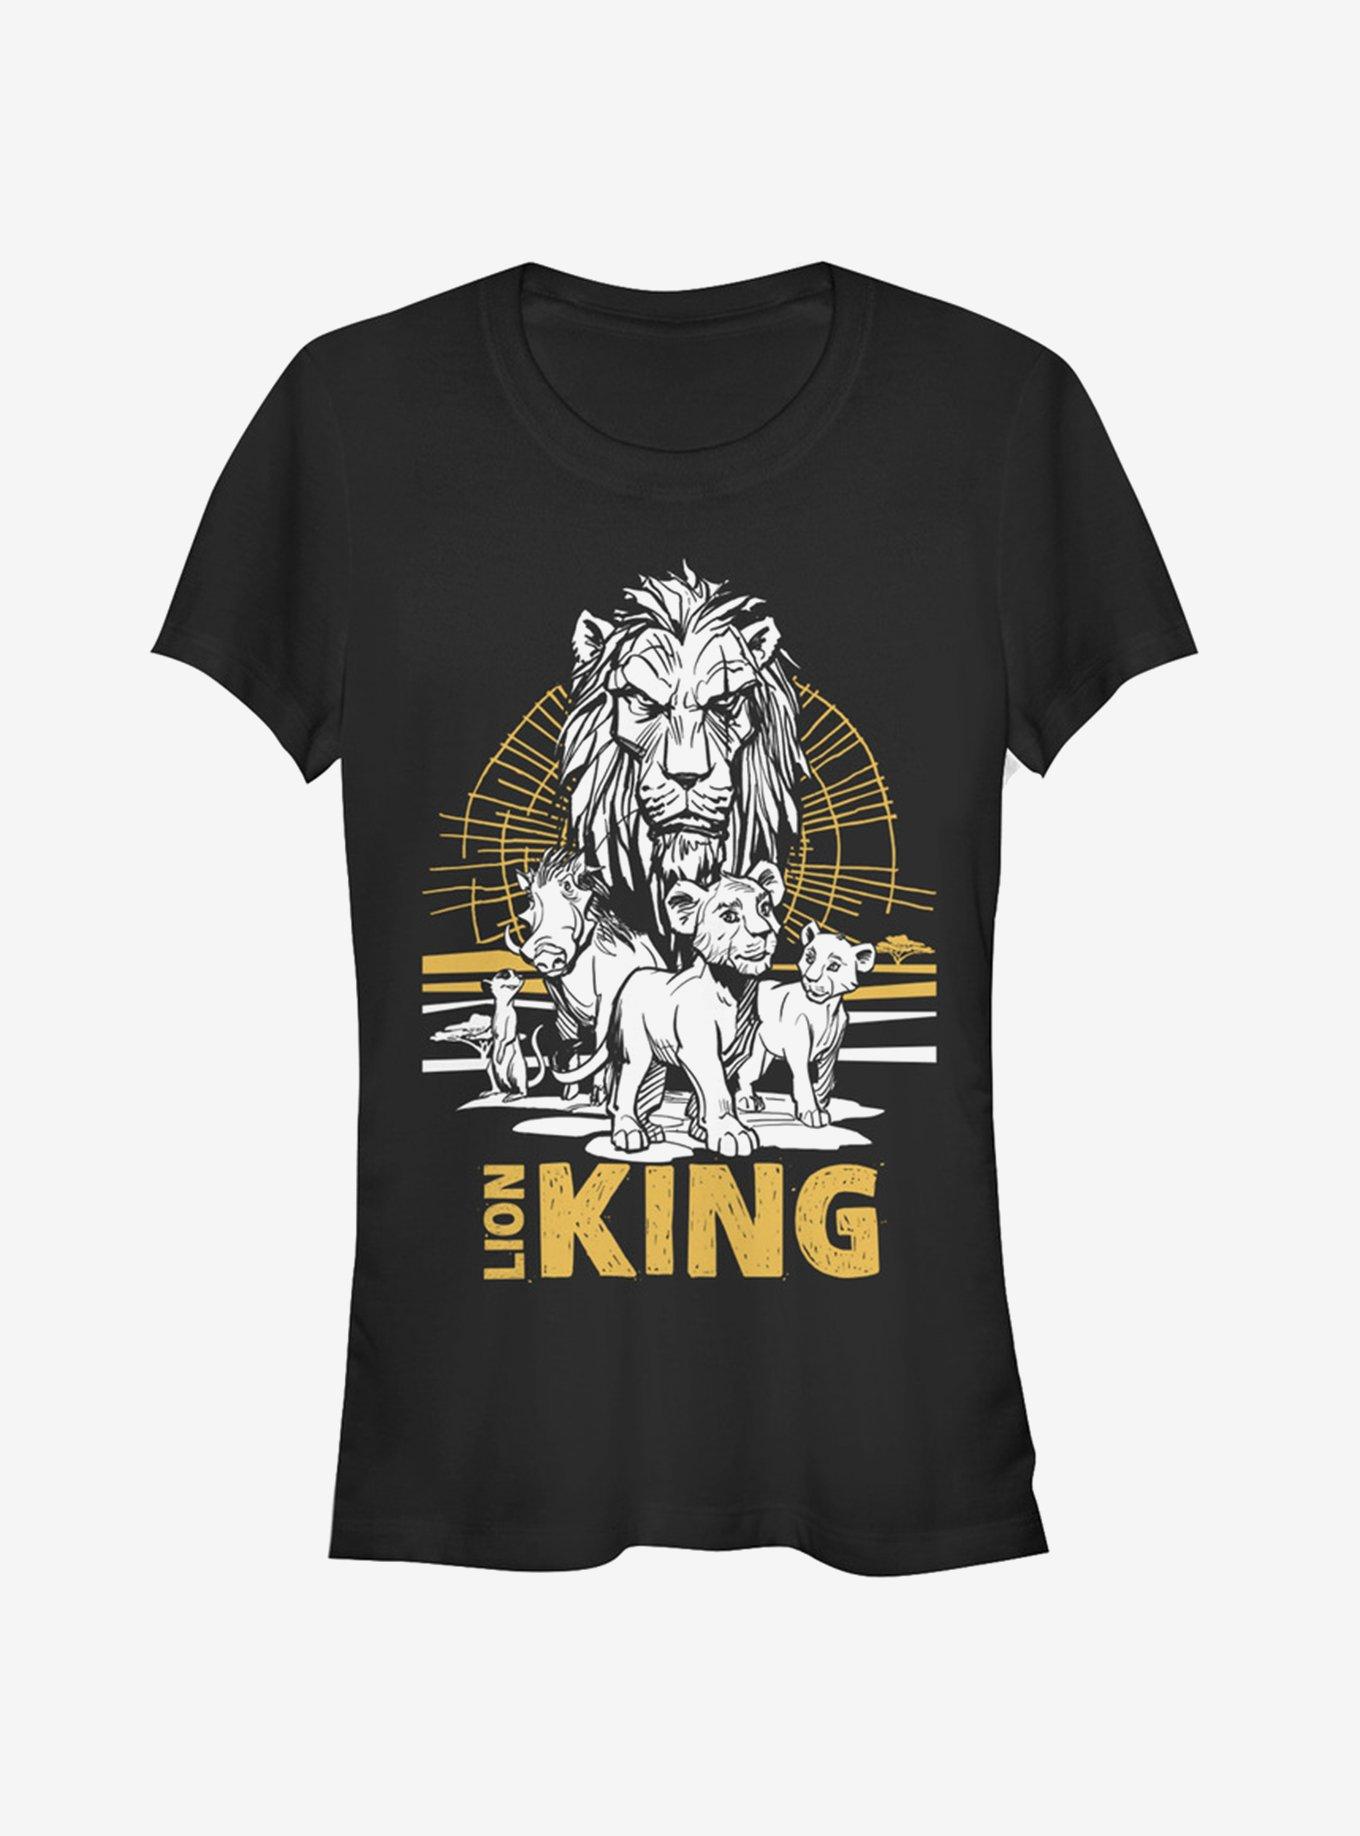 Disney The Lion King 2019 Lion King Group Girls T-Shirt, BLACK, hi-res